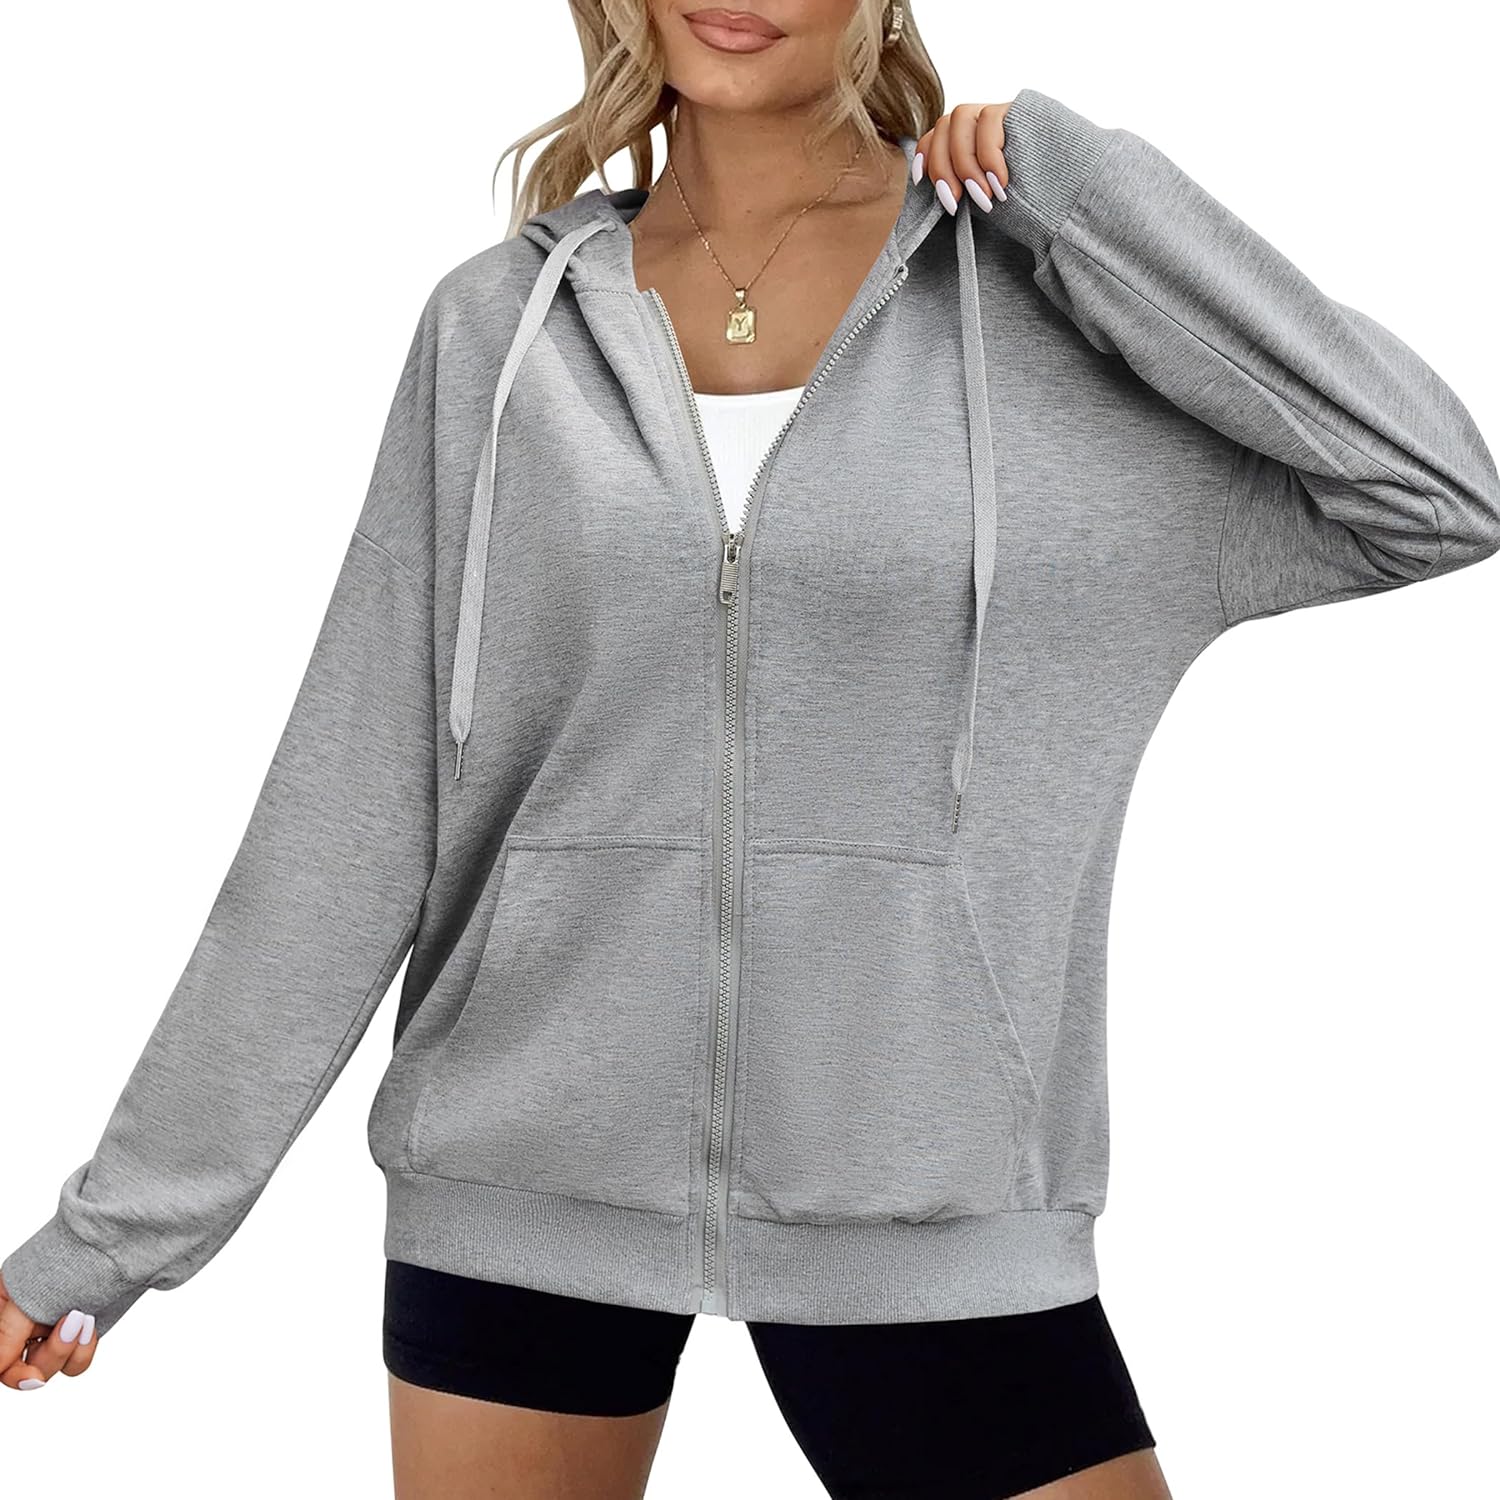 Zeagoo Women's Lightweight Hoodies Full Zip Up Oversized Sweatshirts with Pockets Long Sleeve Thin Casual Hooded Jackets